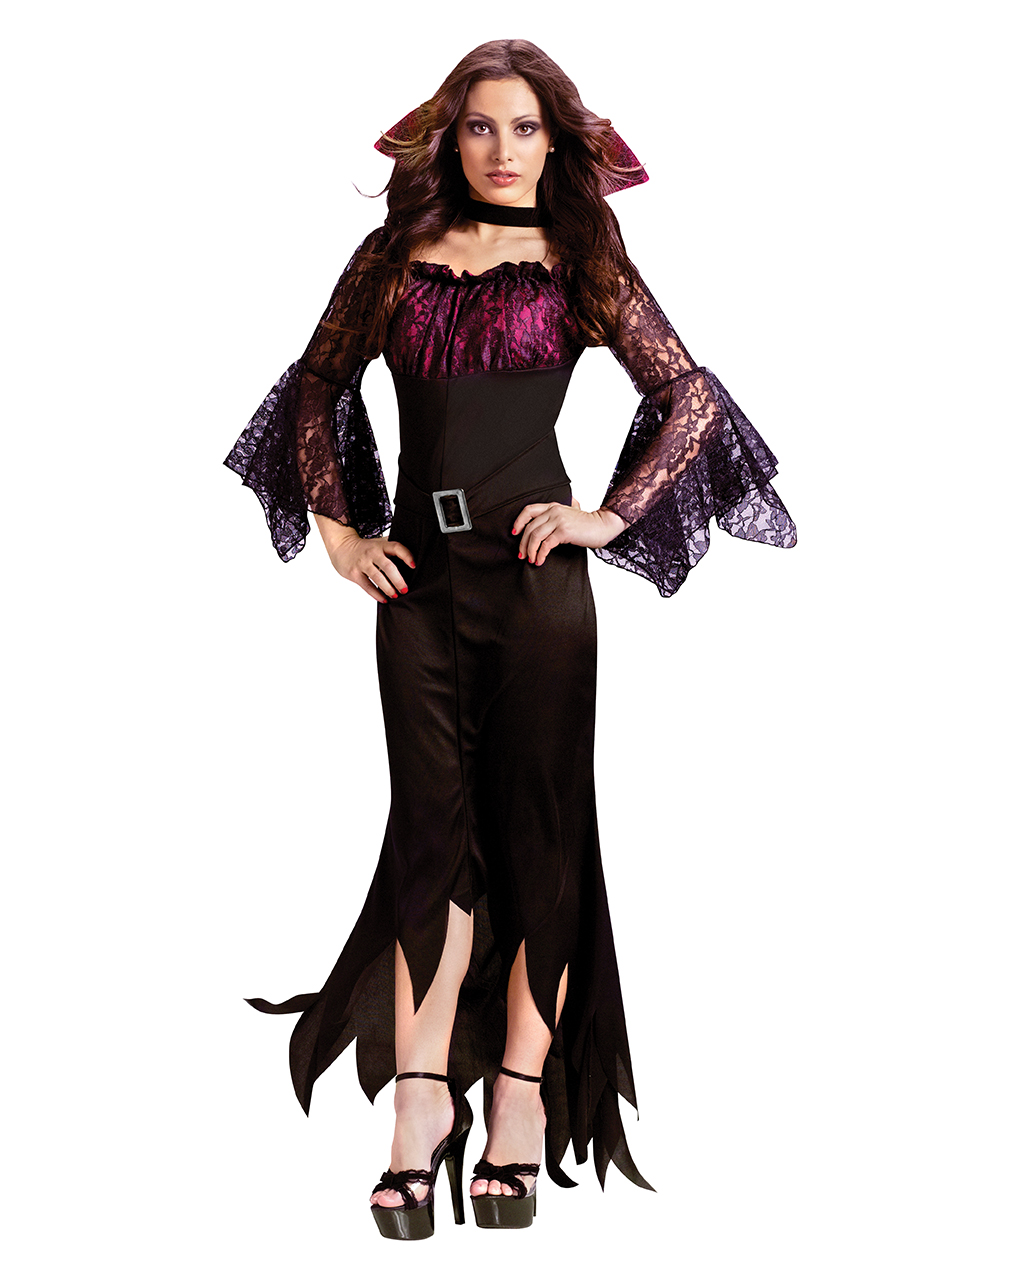 Vampir Gothic Robe Gr 36-48 Halloween Damen Kostüm Rubies 13760